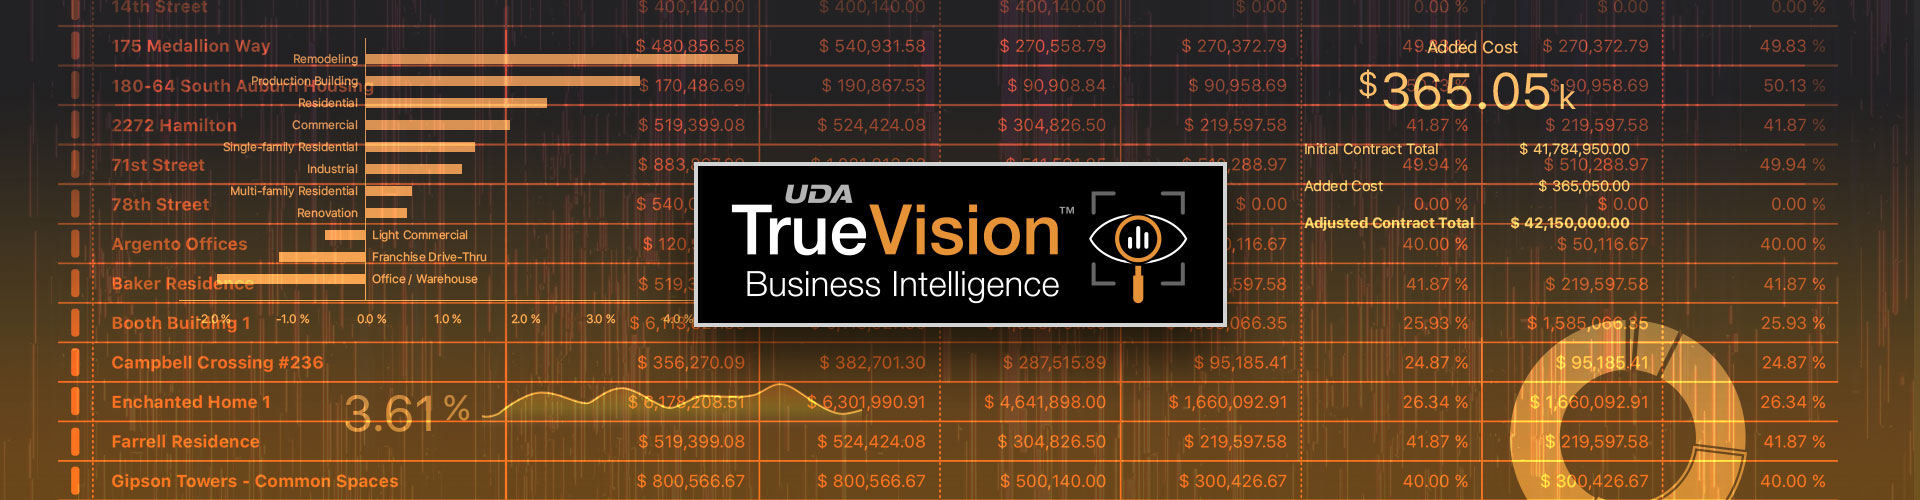 01_truevision_business_intelligence_1920x500